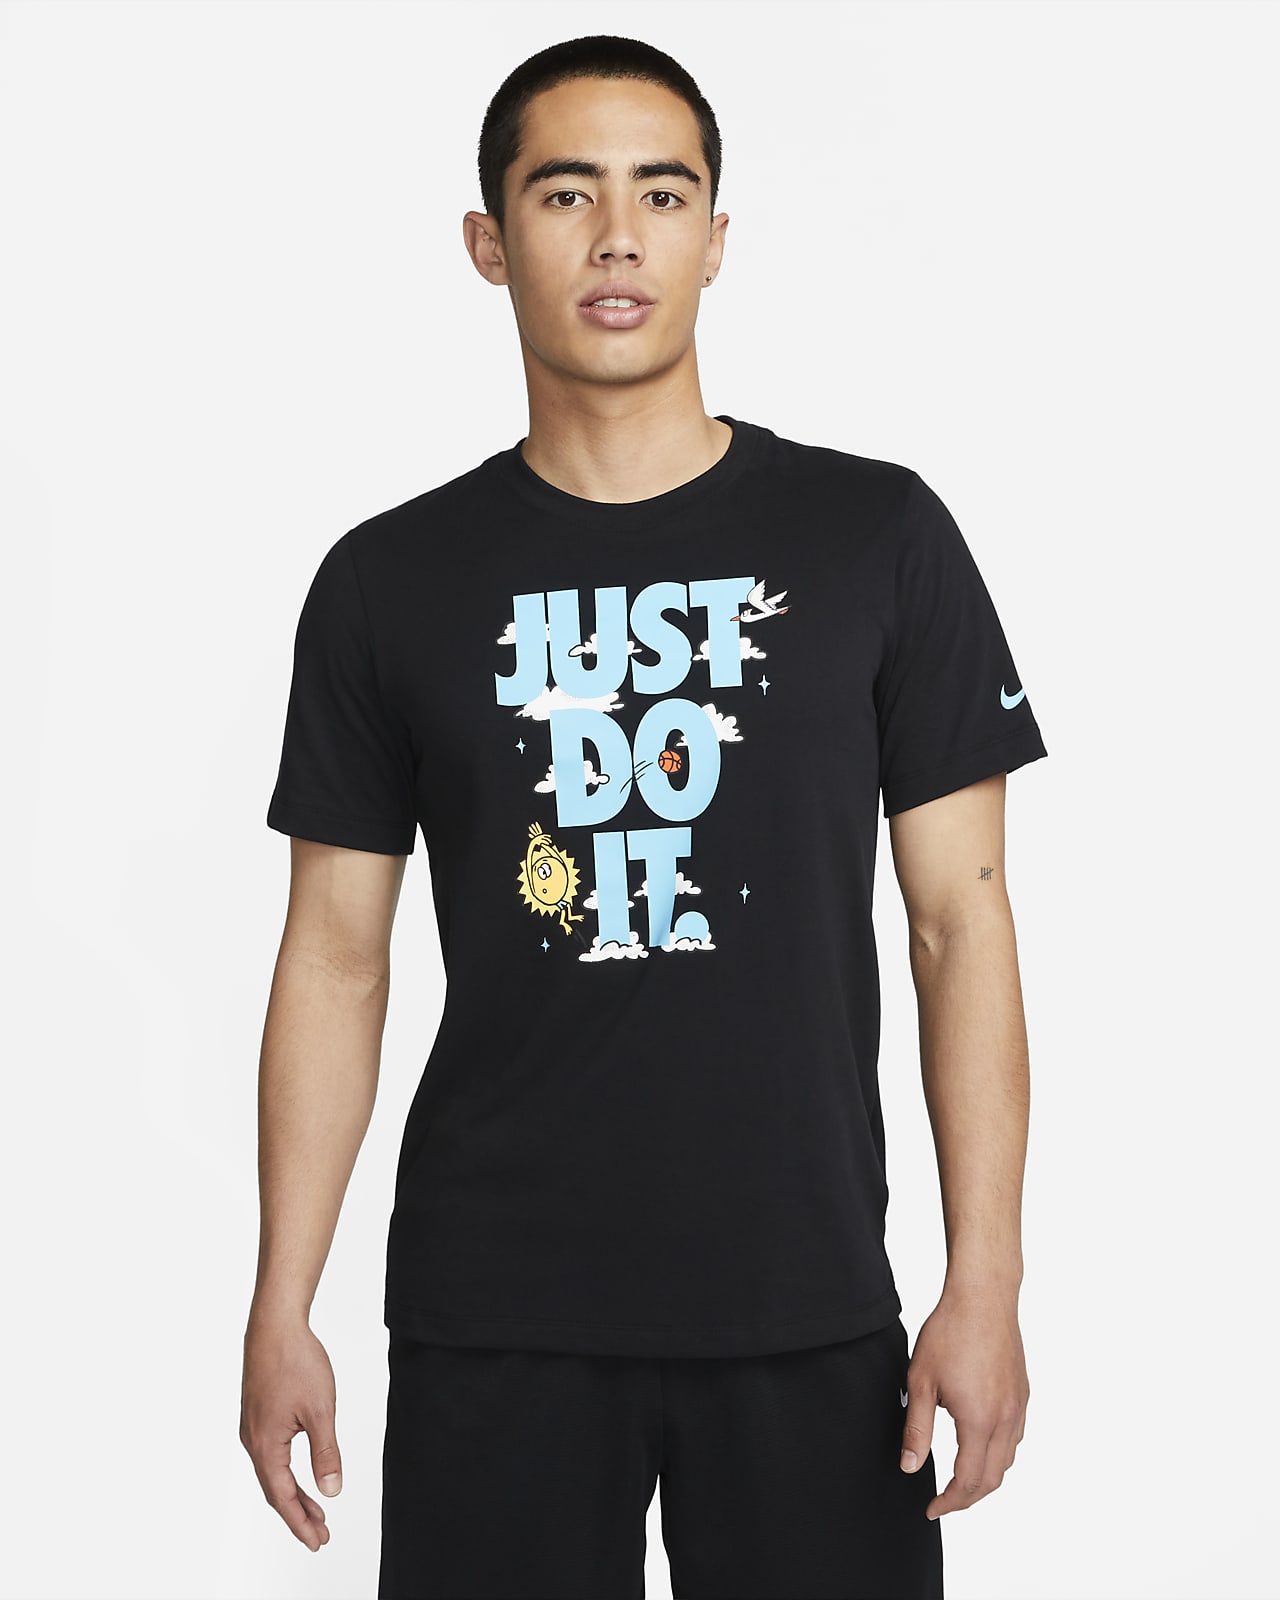 NIKE公式】ナイキ Dri-FIT メンズ バスケットボール Tシャツ.オンラインストア (通販サイト)